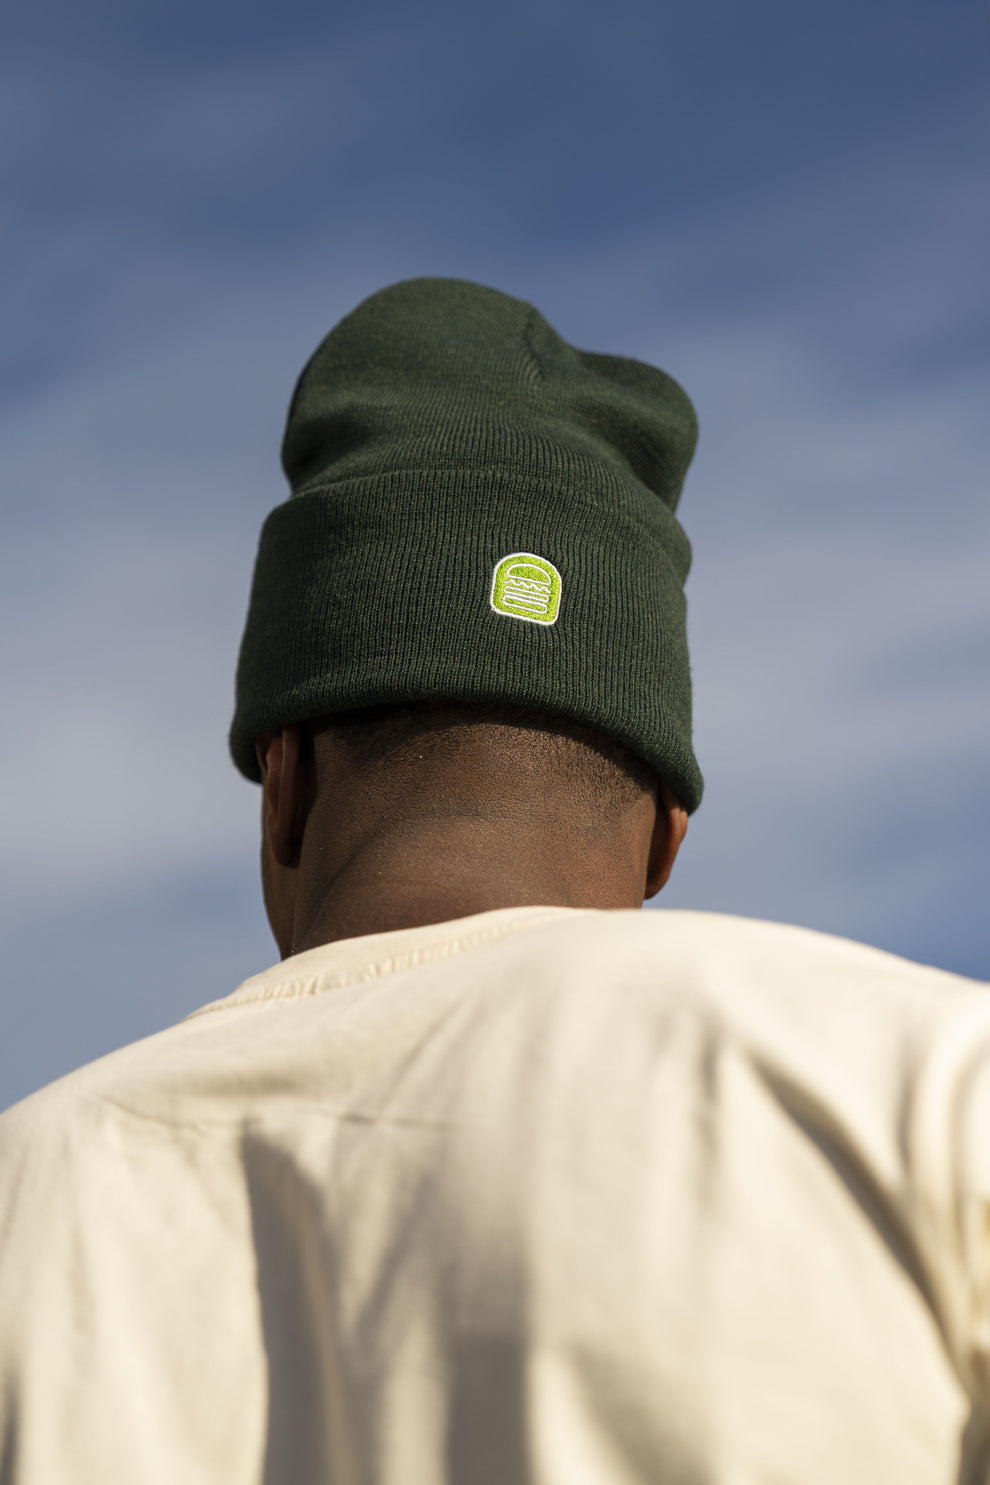 Man outside wearing green Shake Shack beanie with logo facing backwards